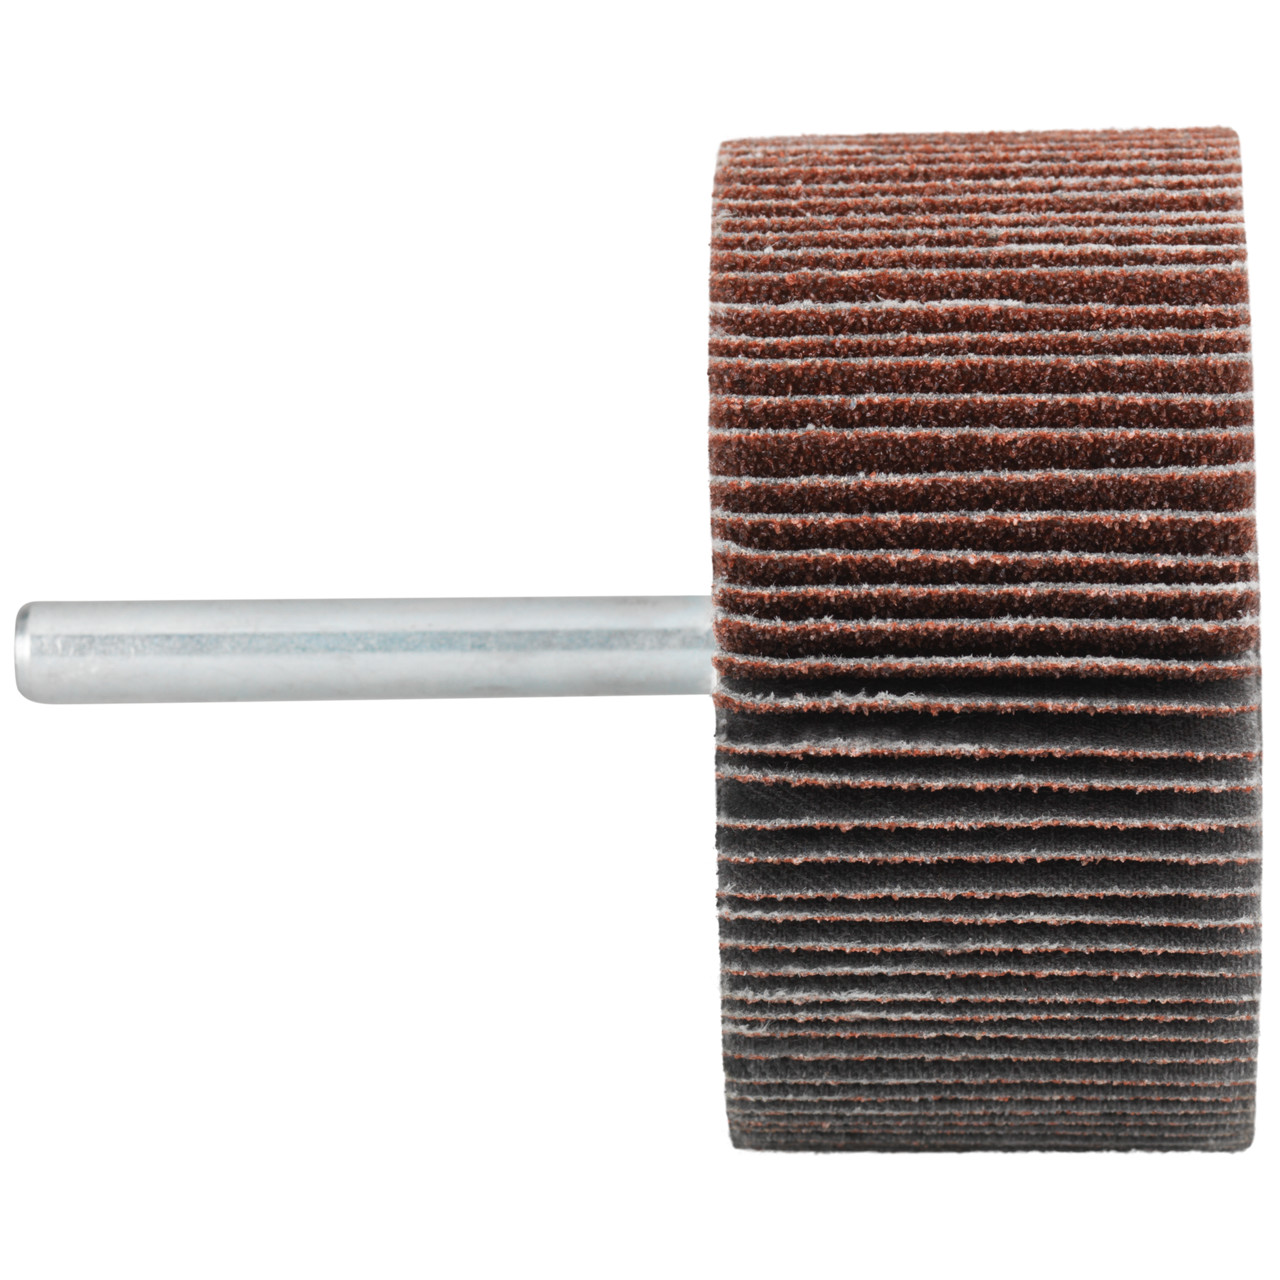 Tyrolit A-P01 C X Perni DxD 40x20 Per acciaio, acciaio inox e metalli non ferrosi, P180, forma: 52LA, Art. 897078